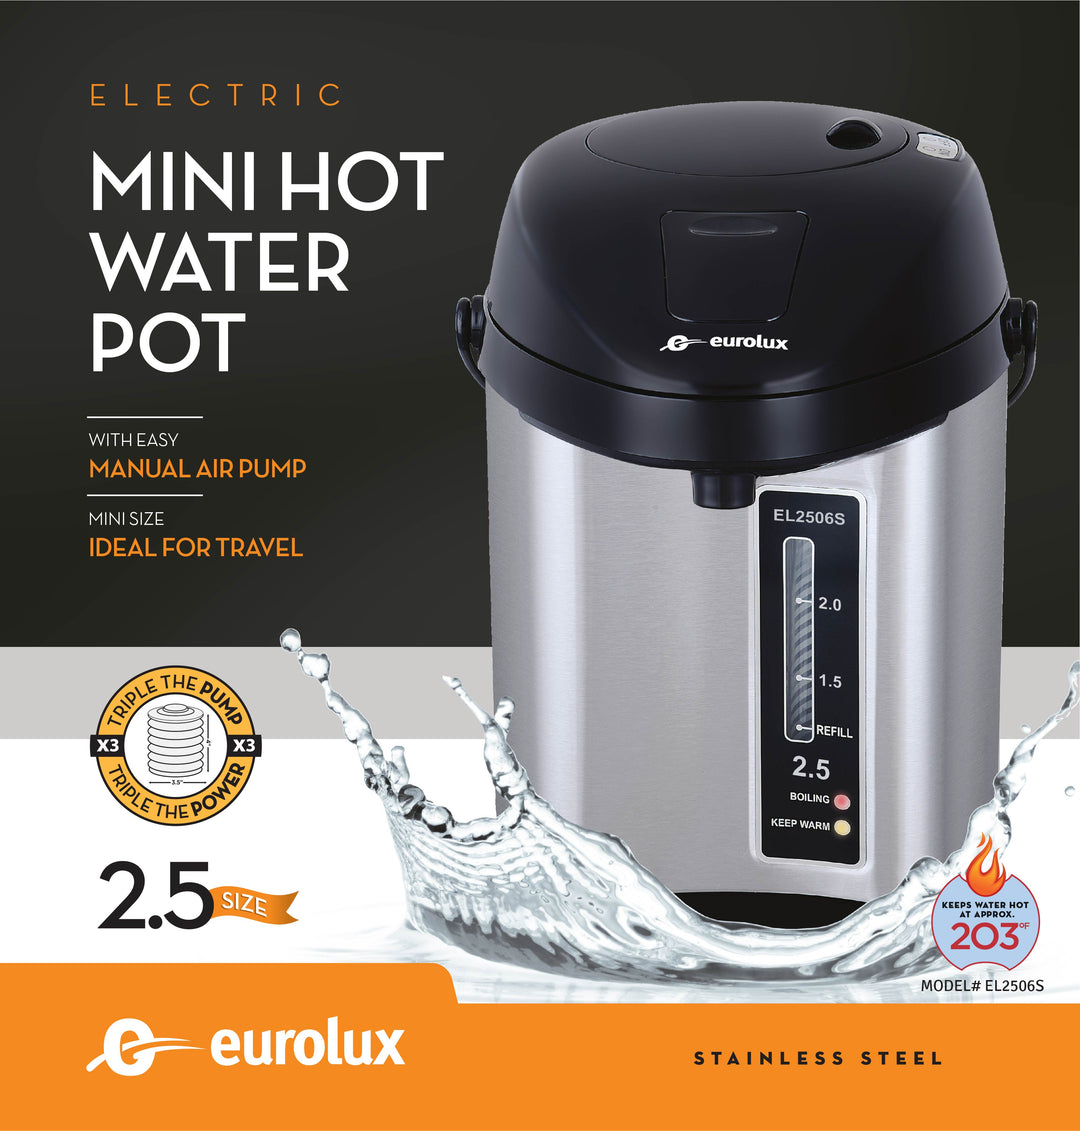  Chefman Electric Hot Water Pot Urn w/Auto & Manual